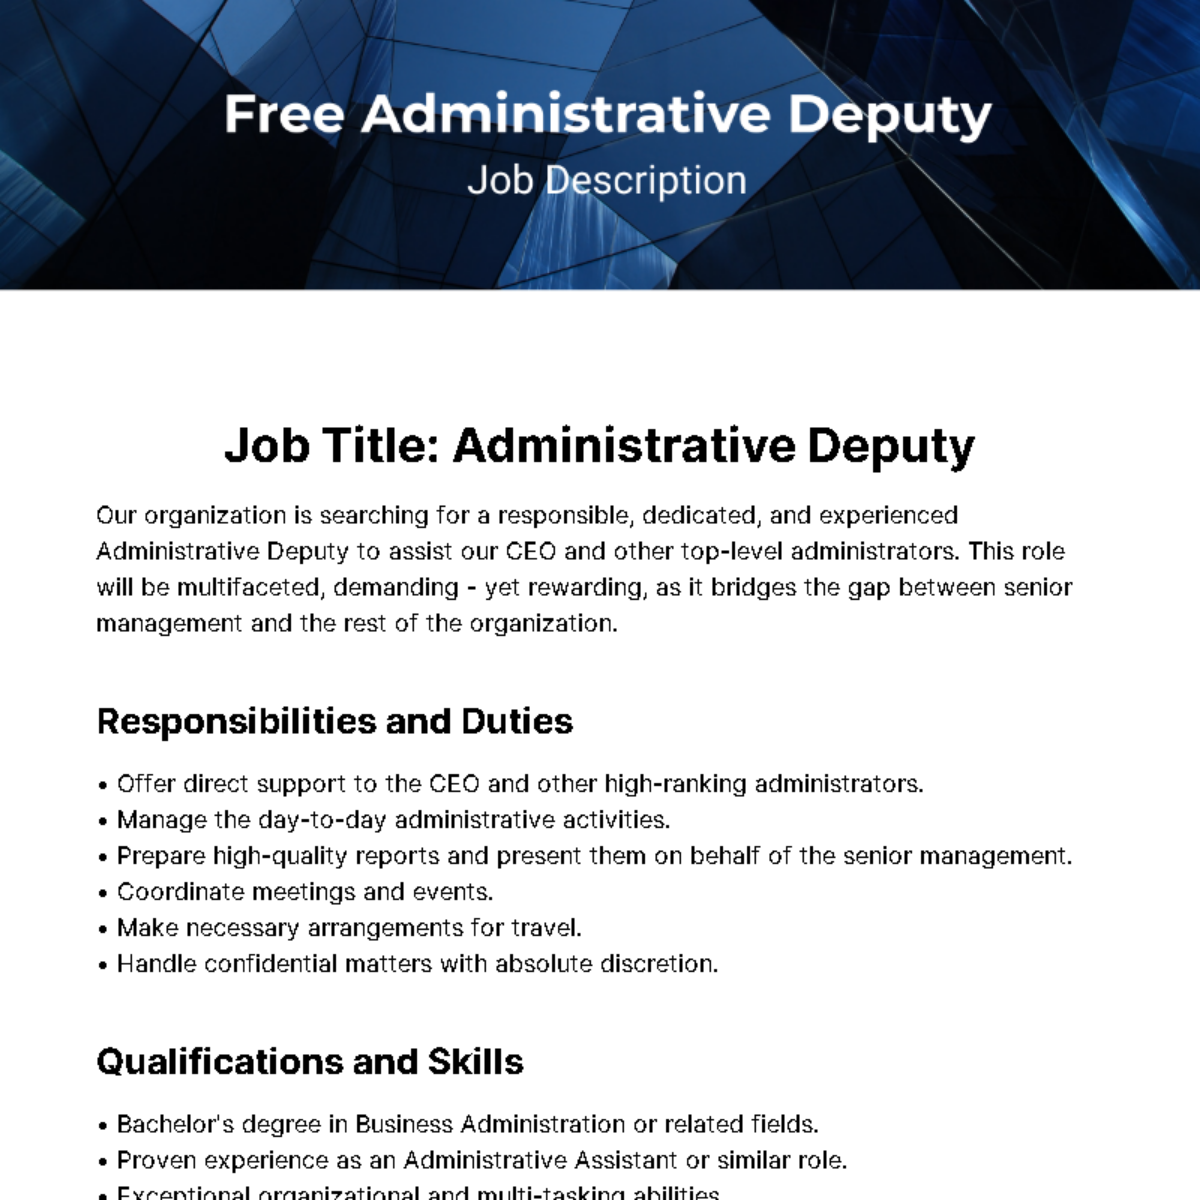 Administrative Deputy Job Description Template